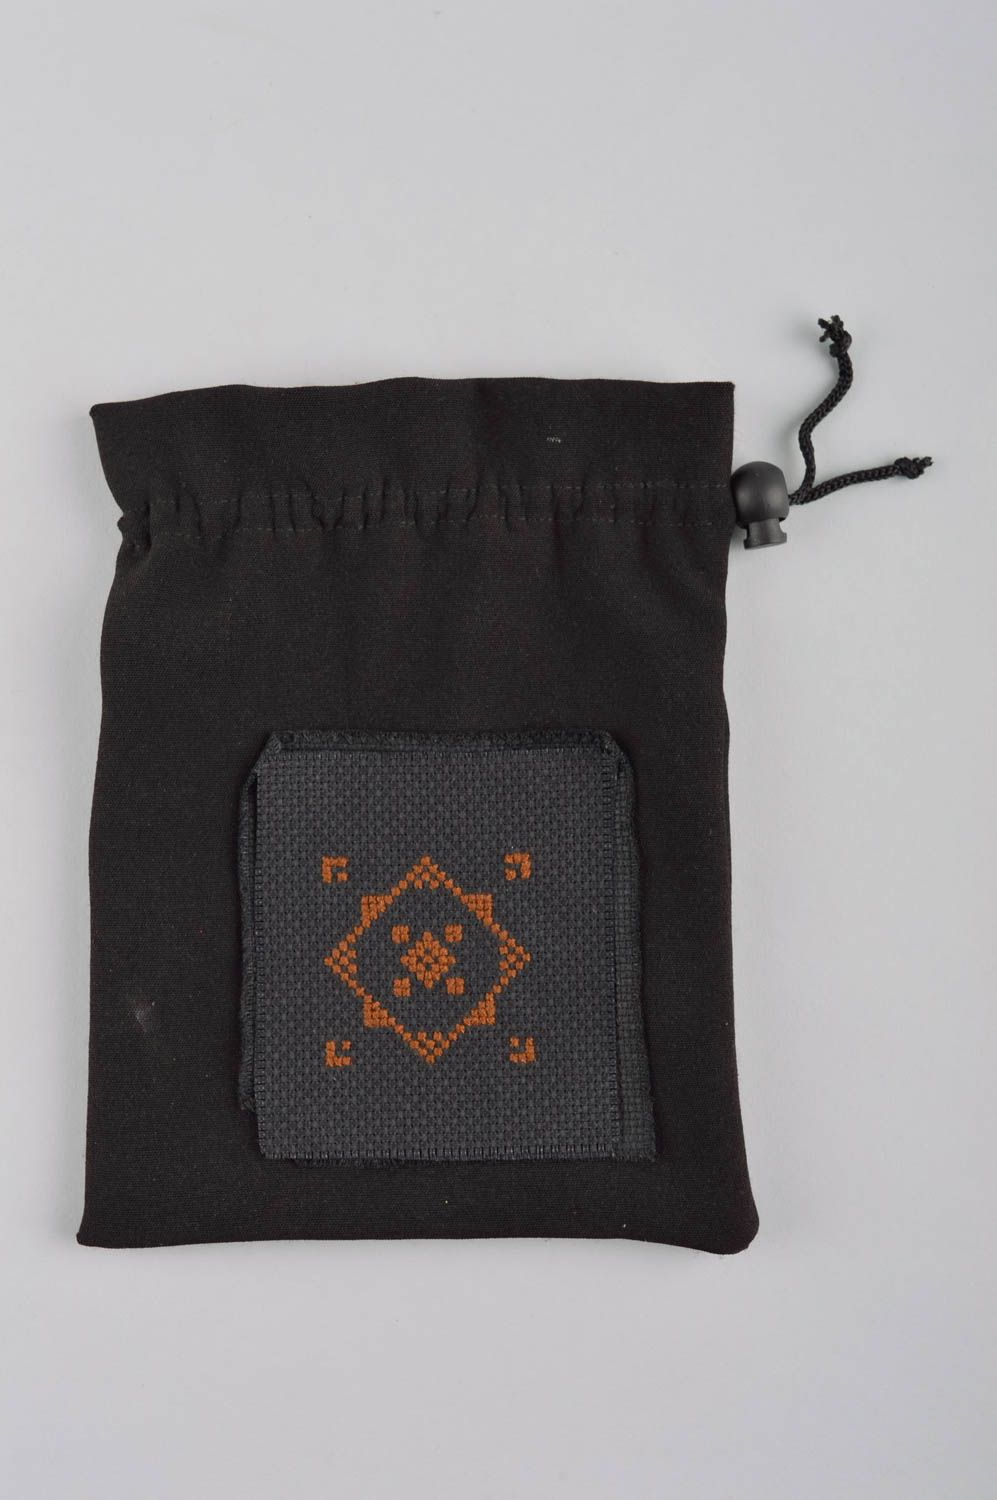 Unusual handmade fabric purse black fabric pouch amazing designs small gifts photo 2